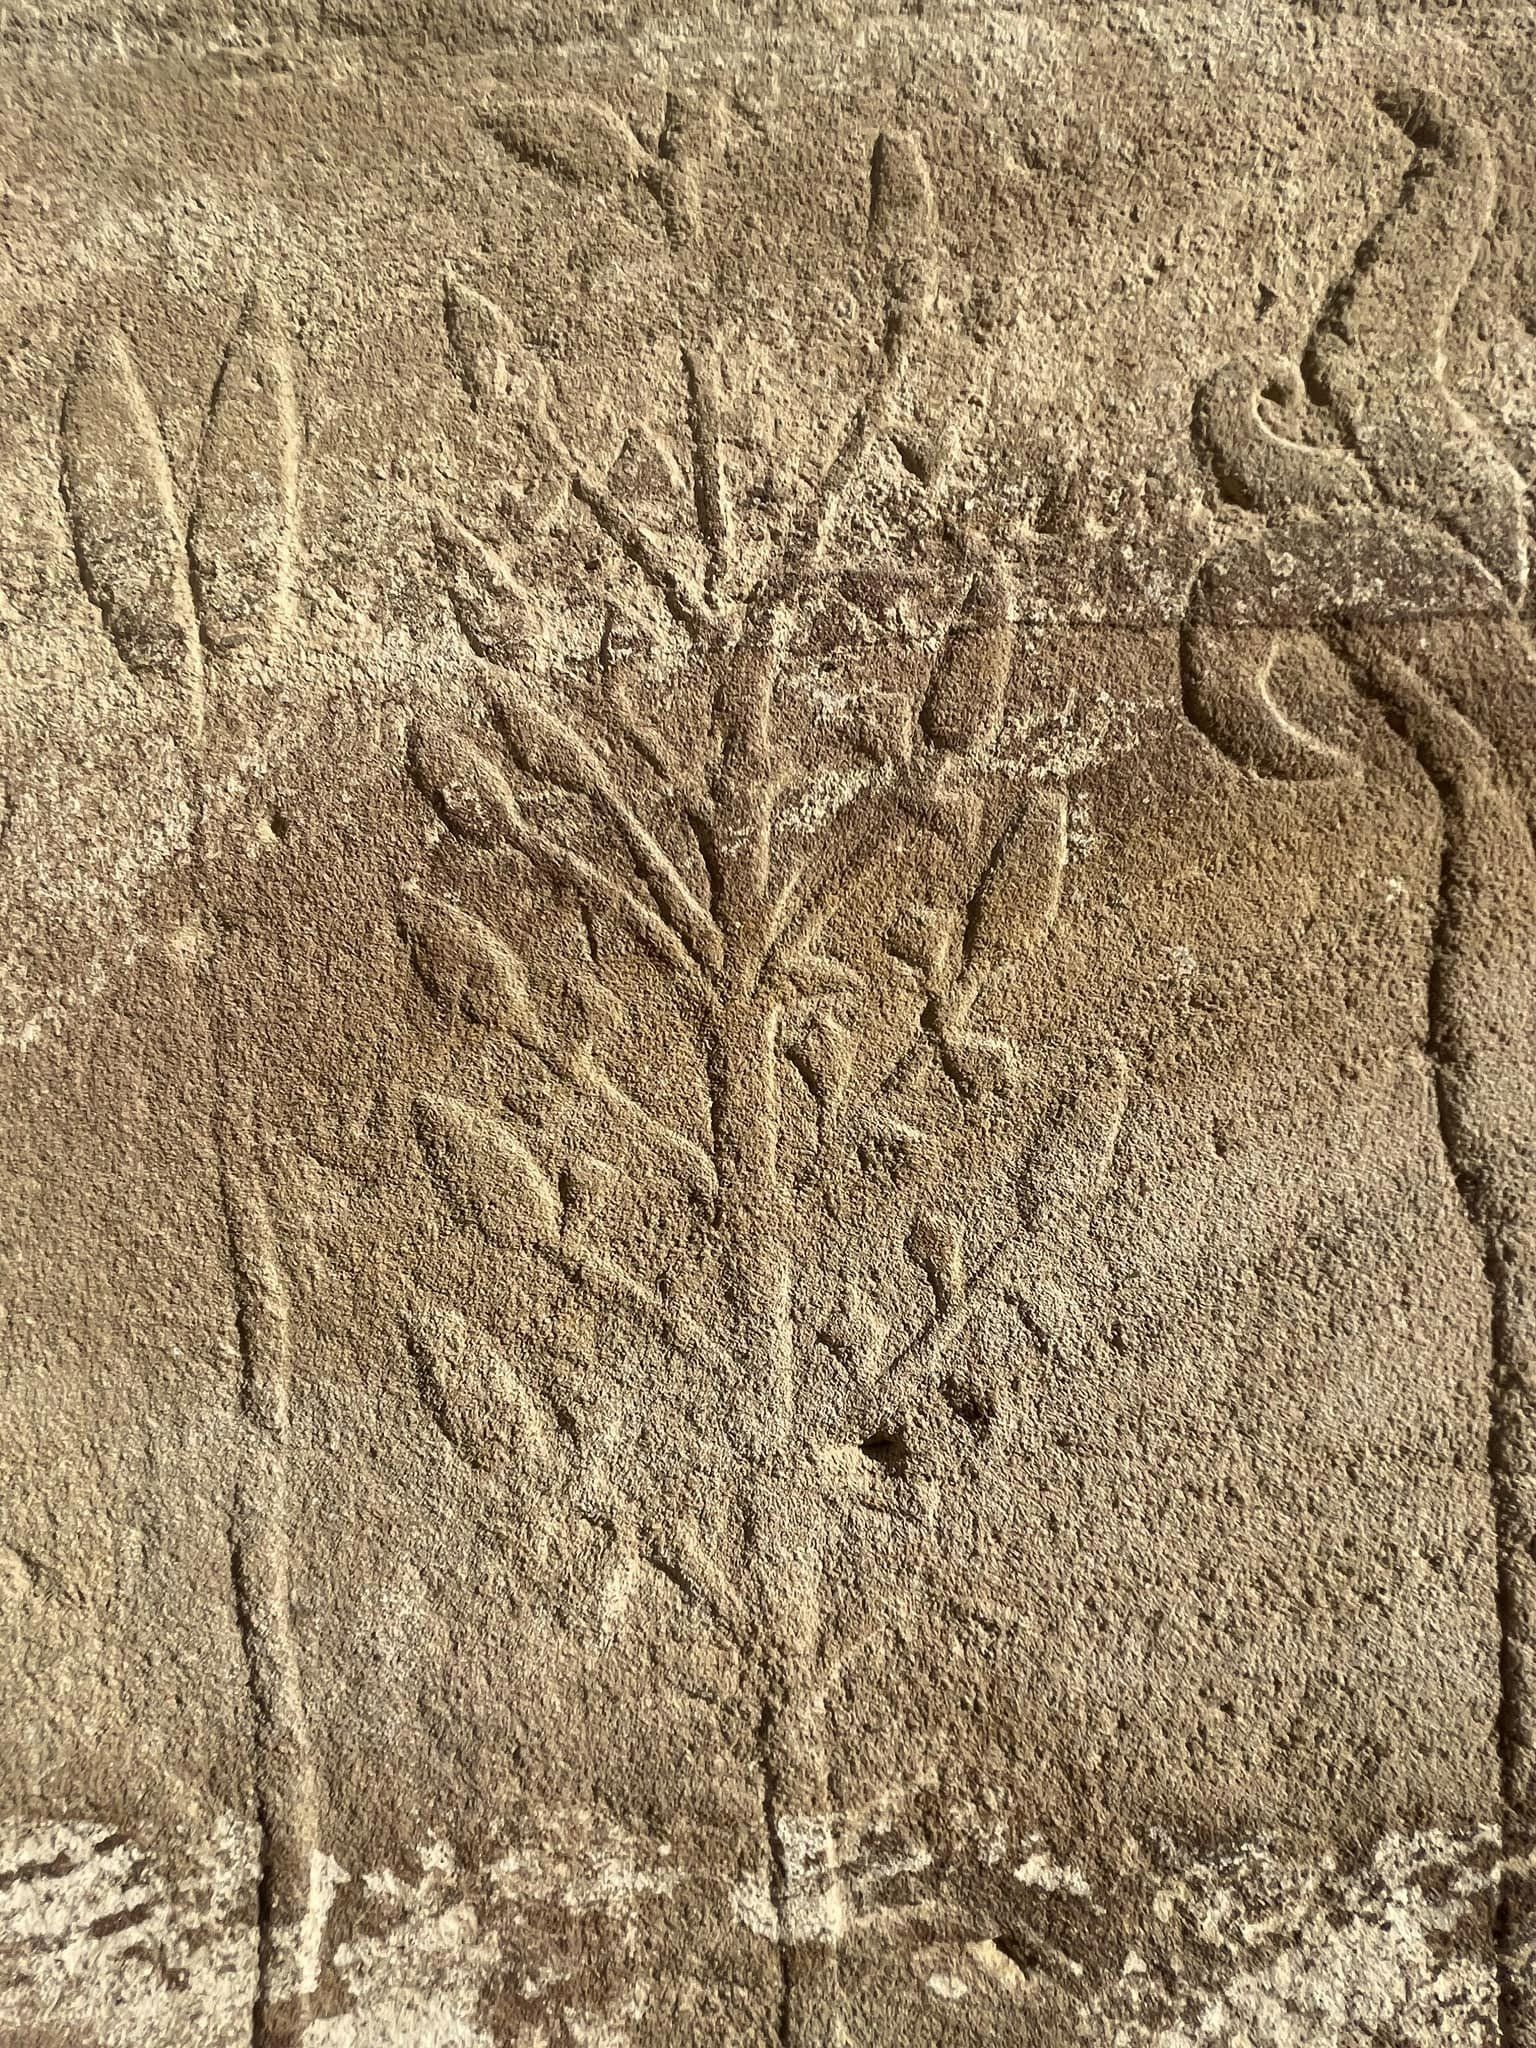 Herbier du jardin botanique de Thoutmosis III dans le temple de Karnak.